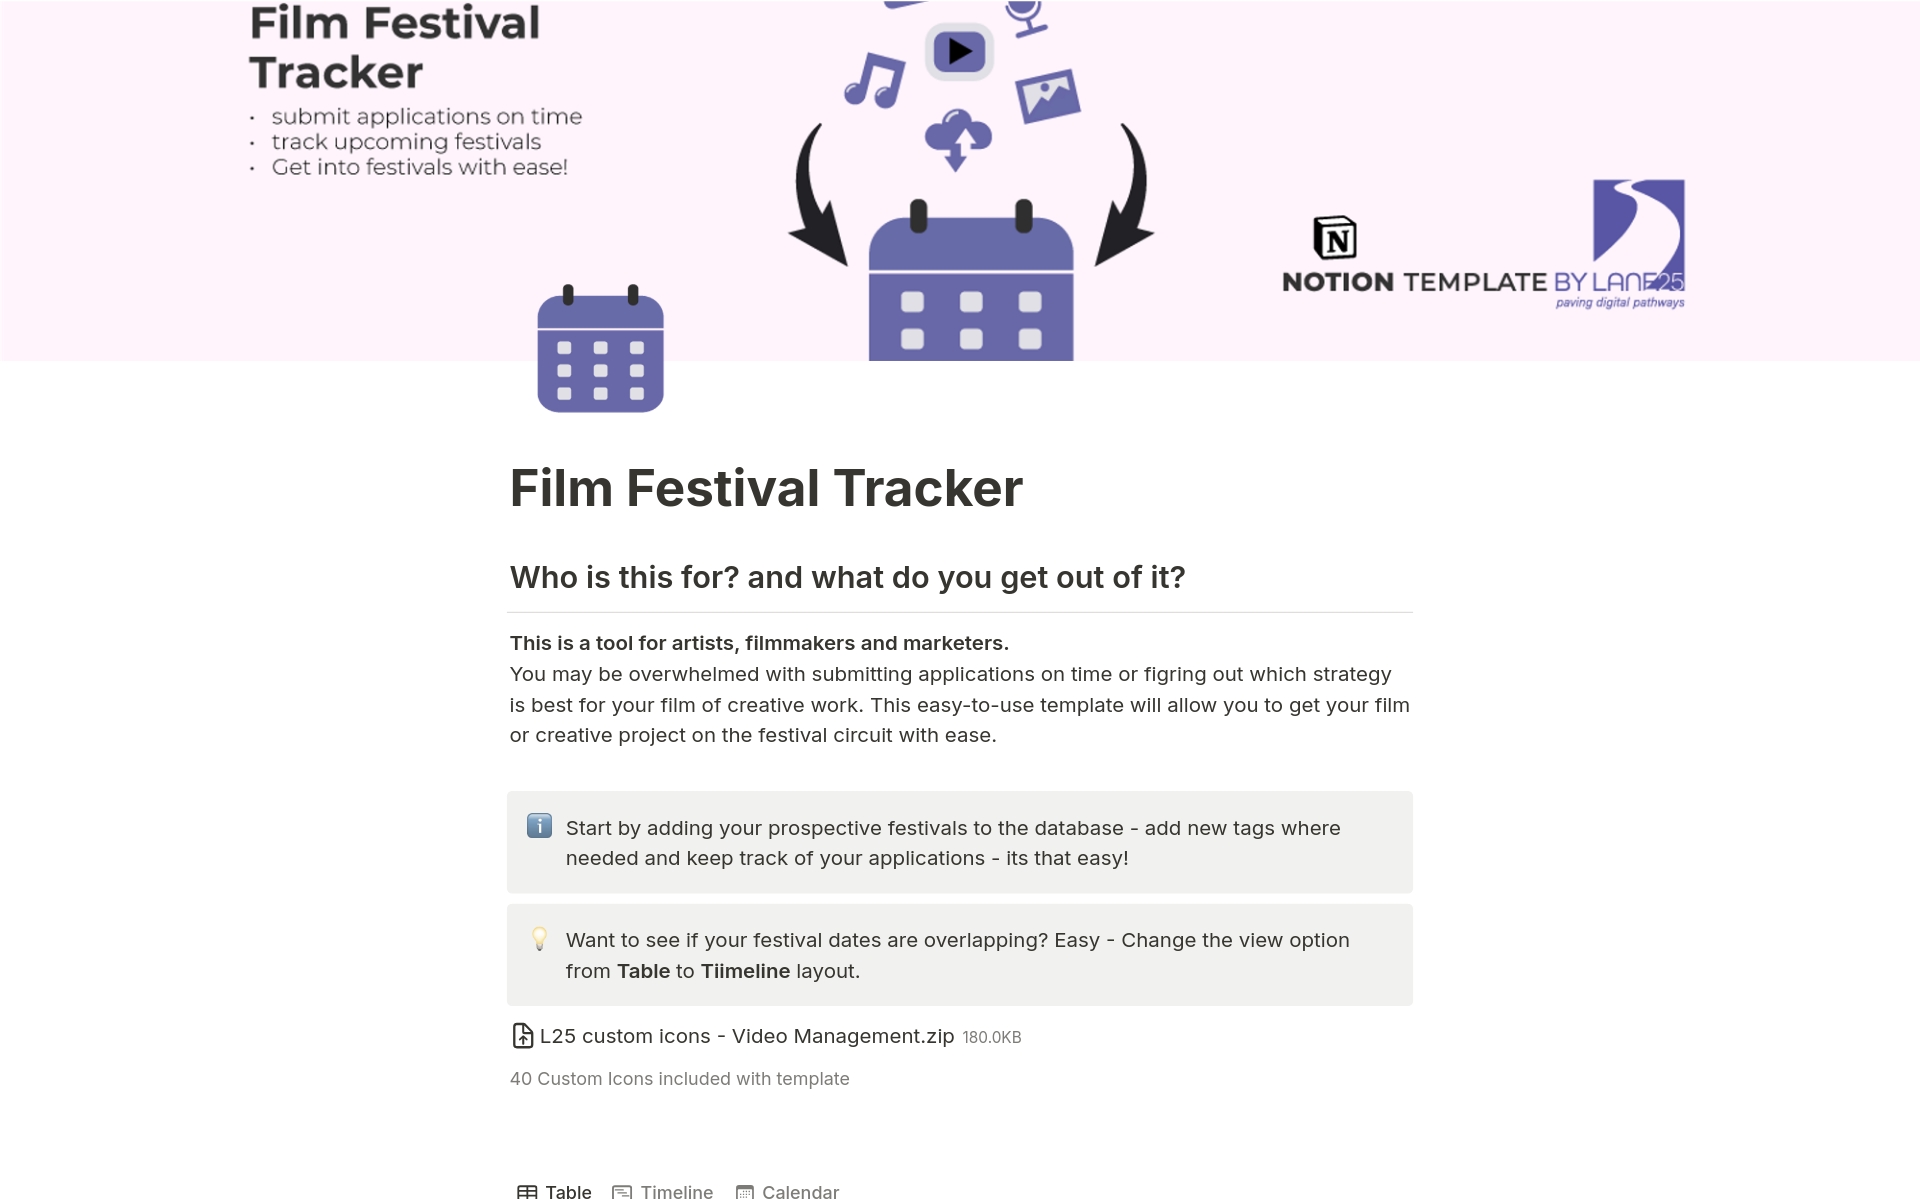 Aperçu du modèle de Film Festival Tracker